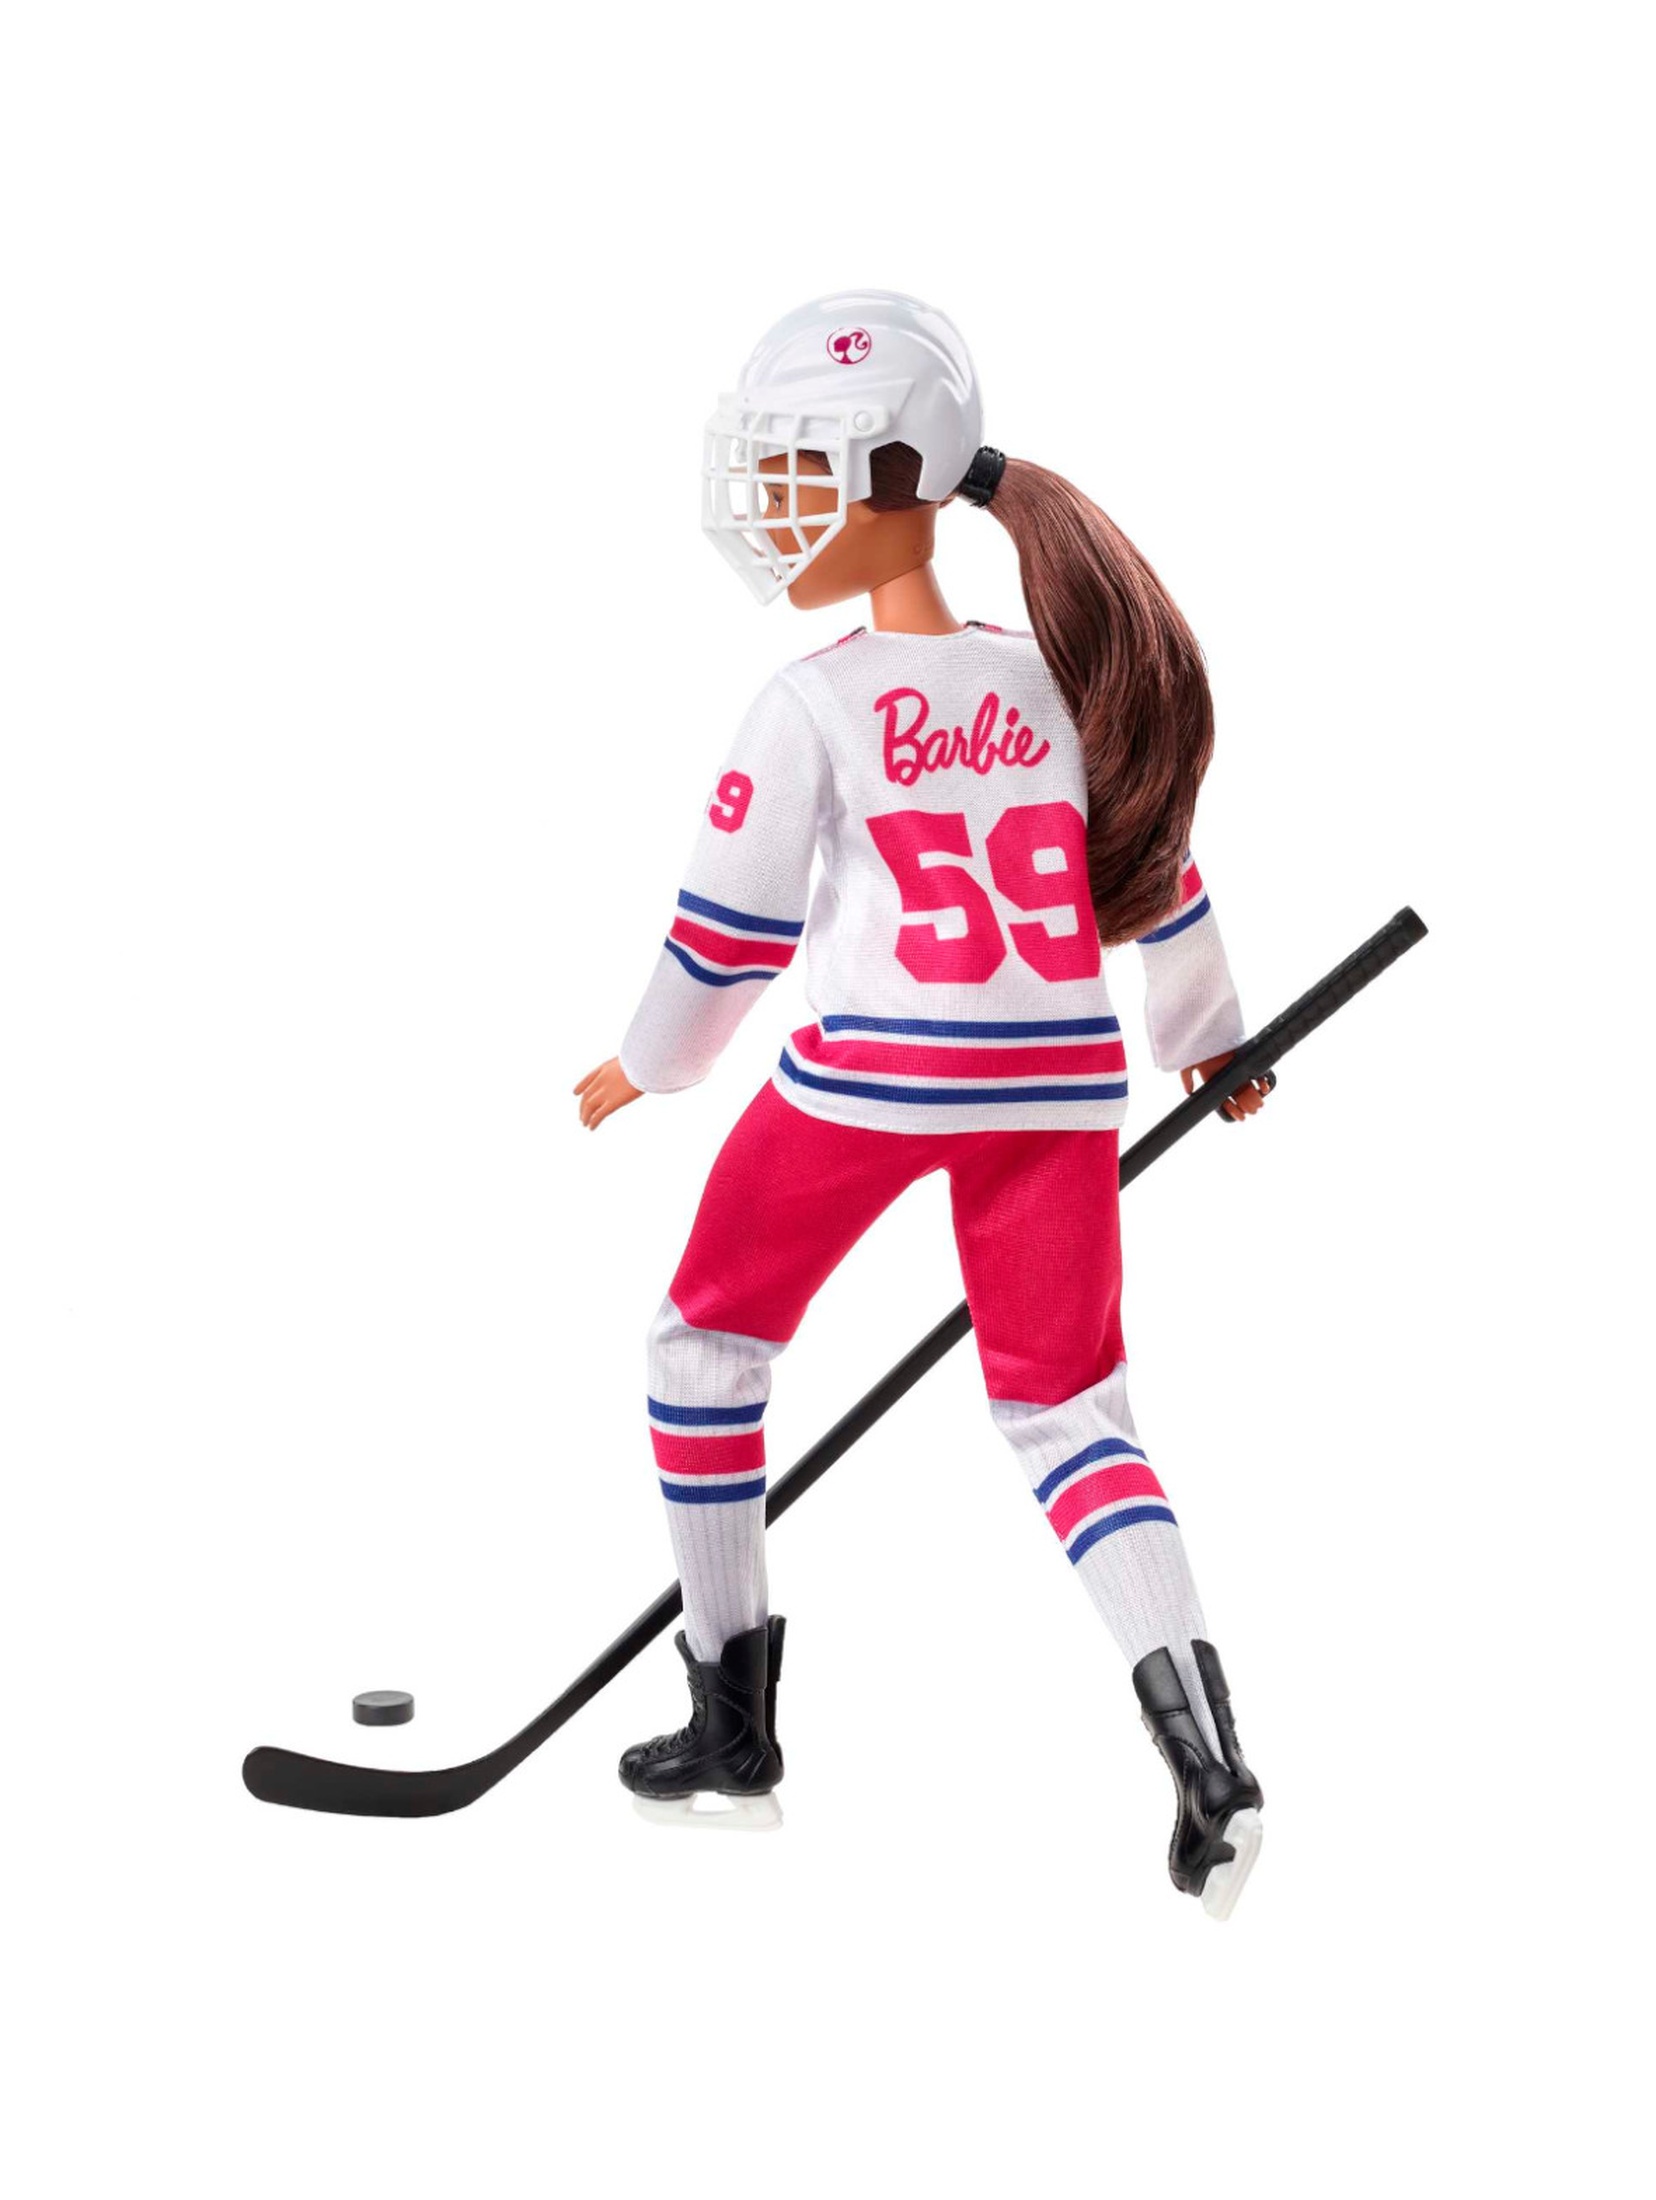 Barbie Sporty zimowe - Hokeistka lalka